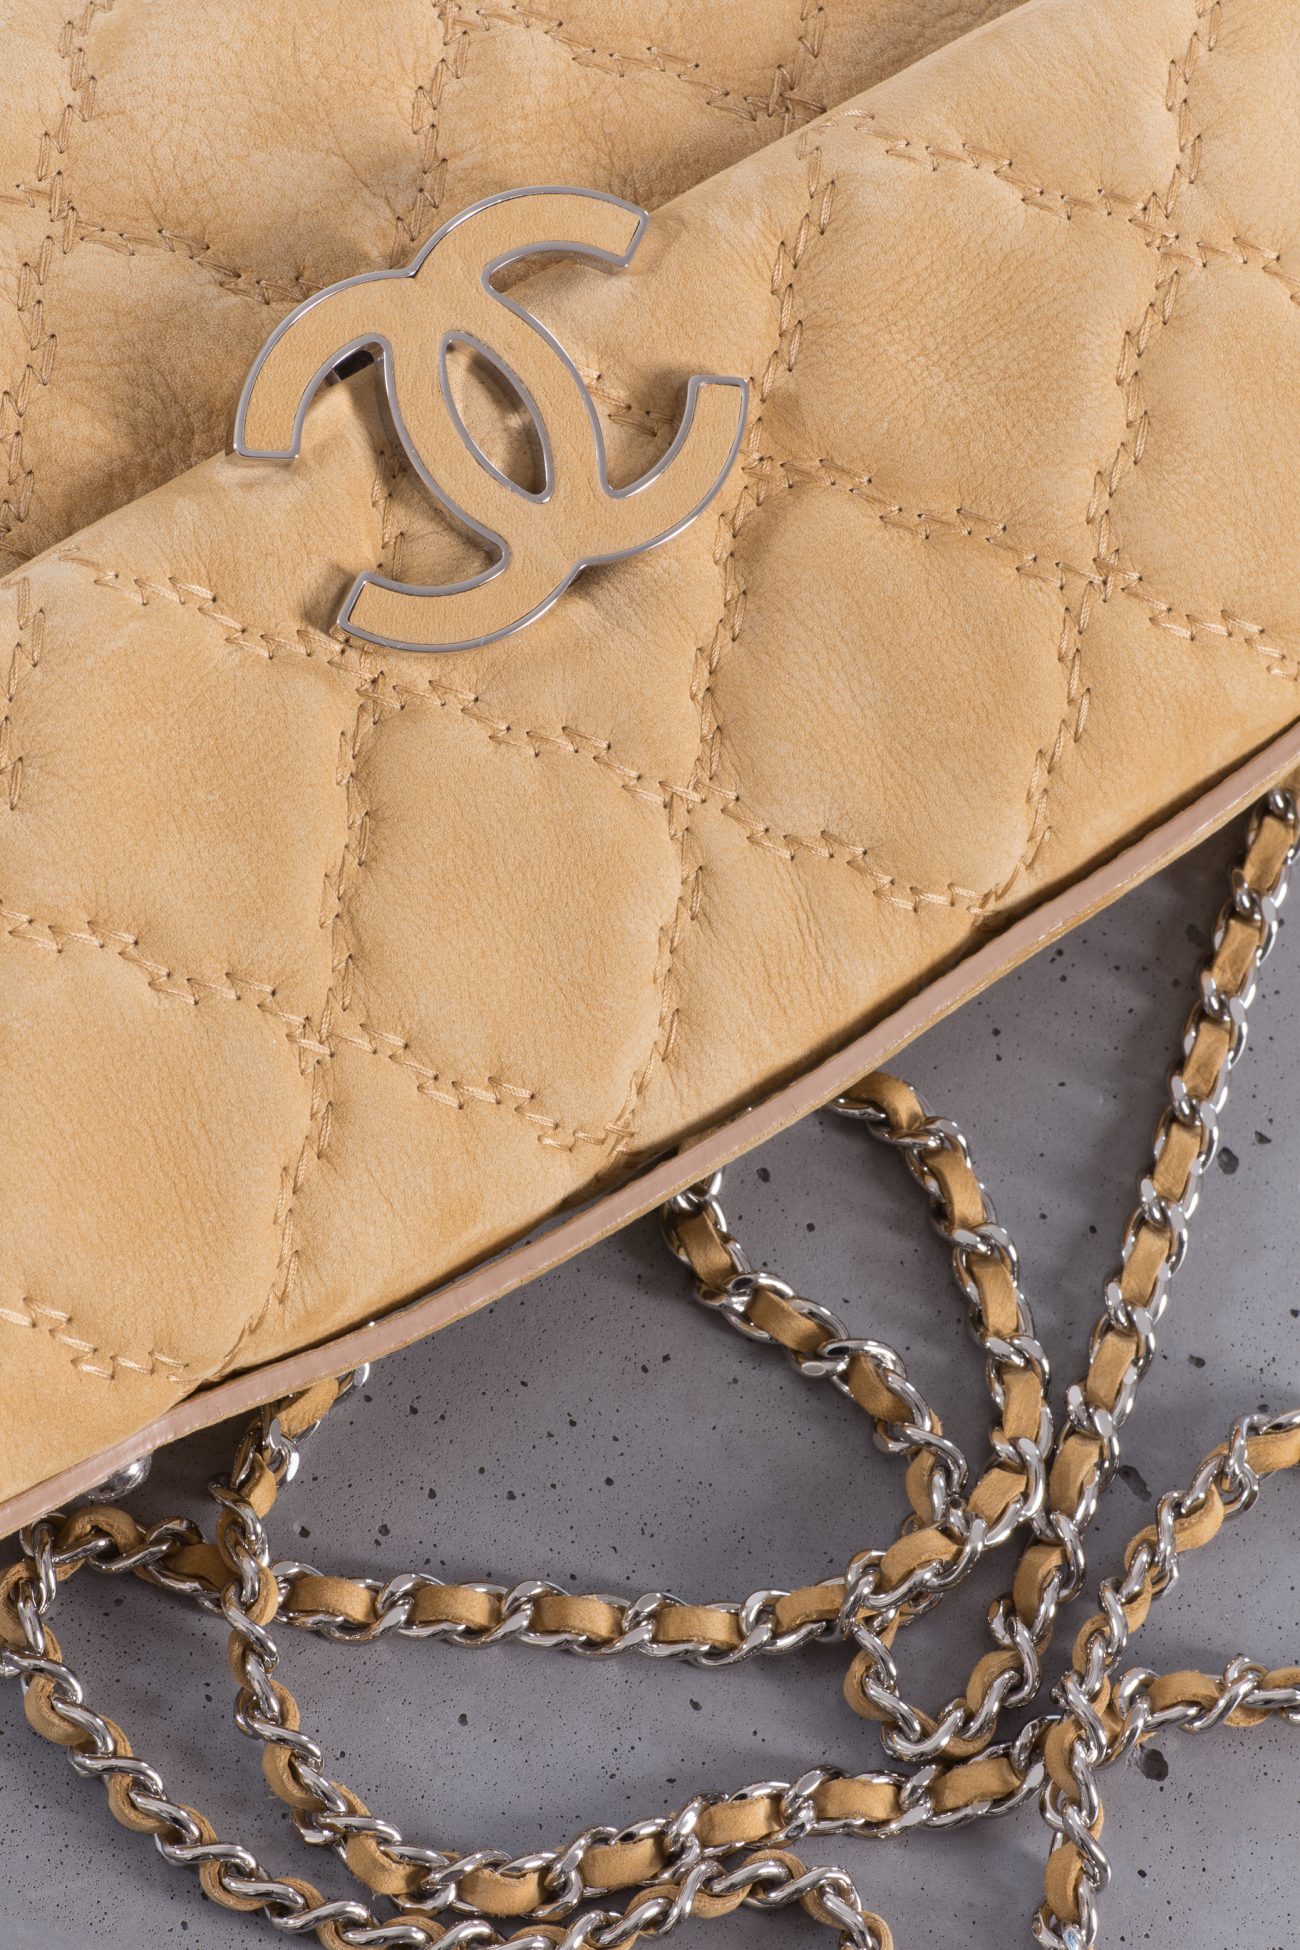 Chanel Deauville Bag - Huntessa Luxury Online Consignment Boutique